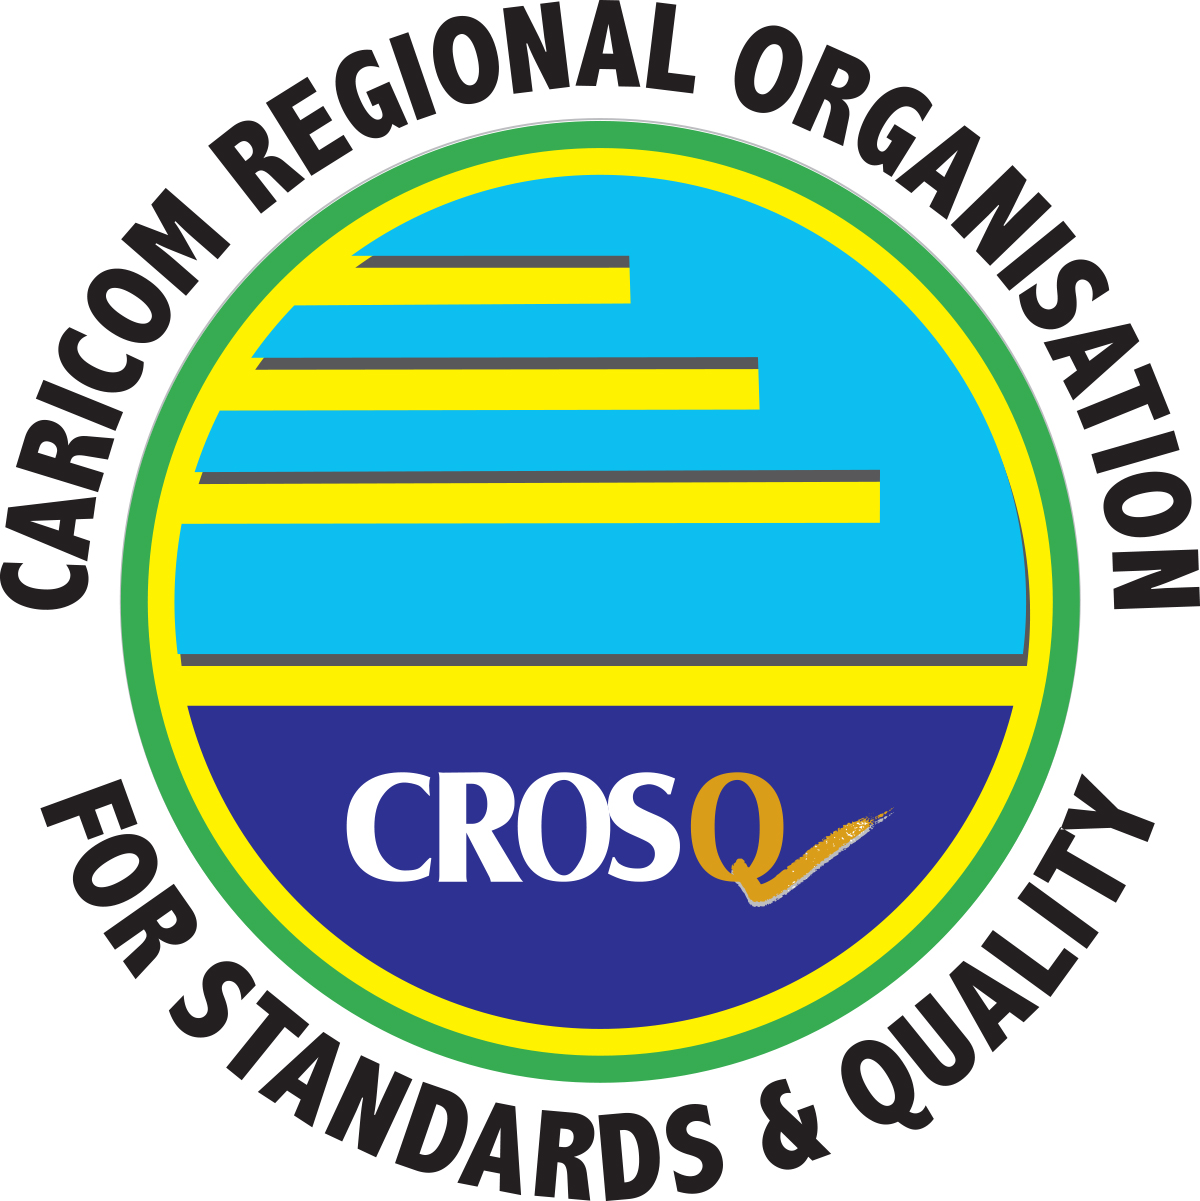 Caricom Regional Organisation